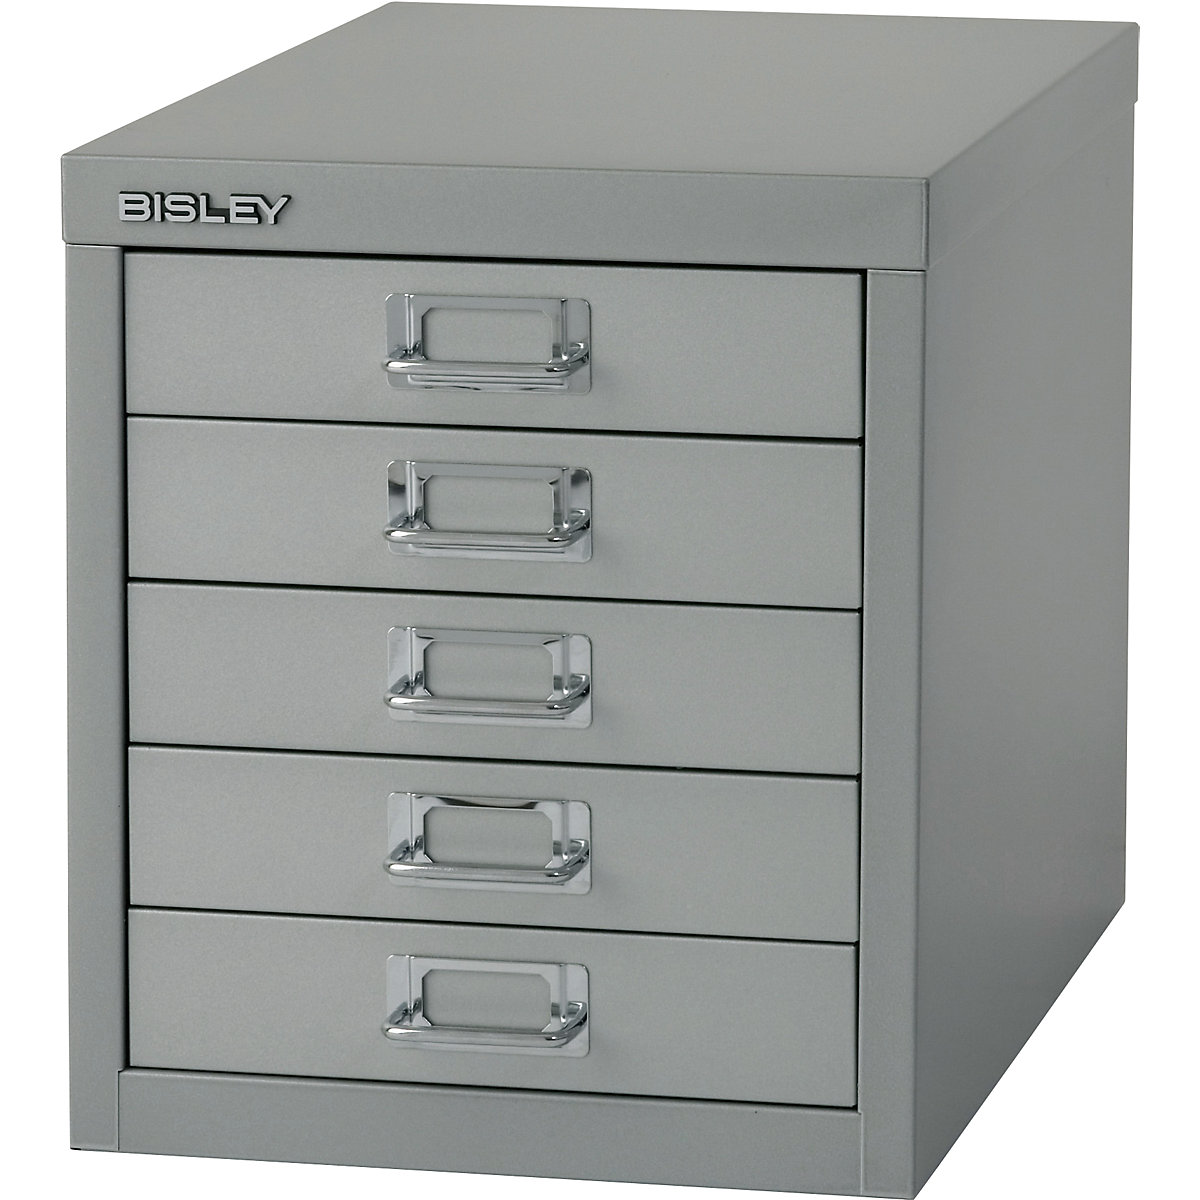 MultiDrawer™ 39 series – BISLEY, A4, 5 drawers, silver-7